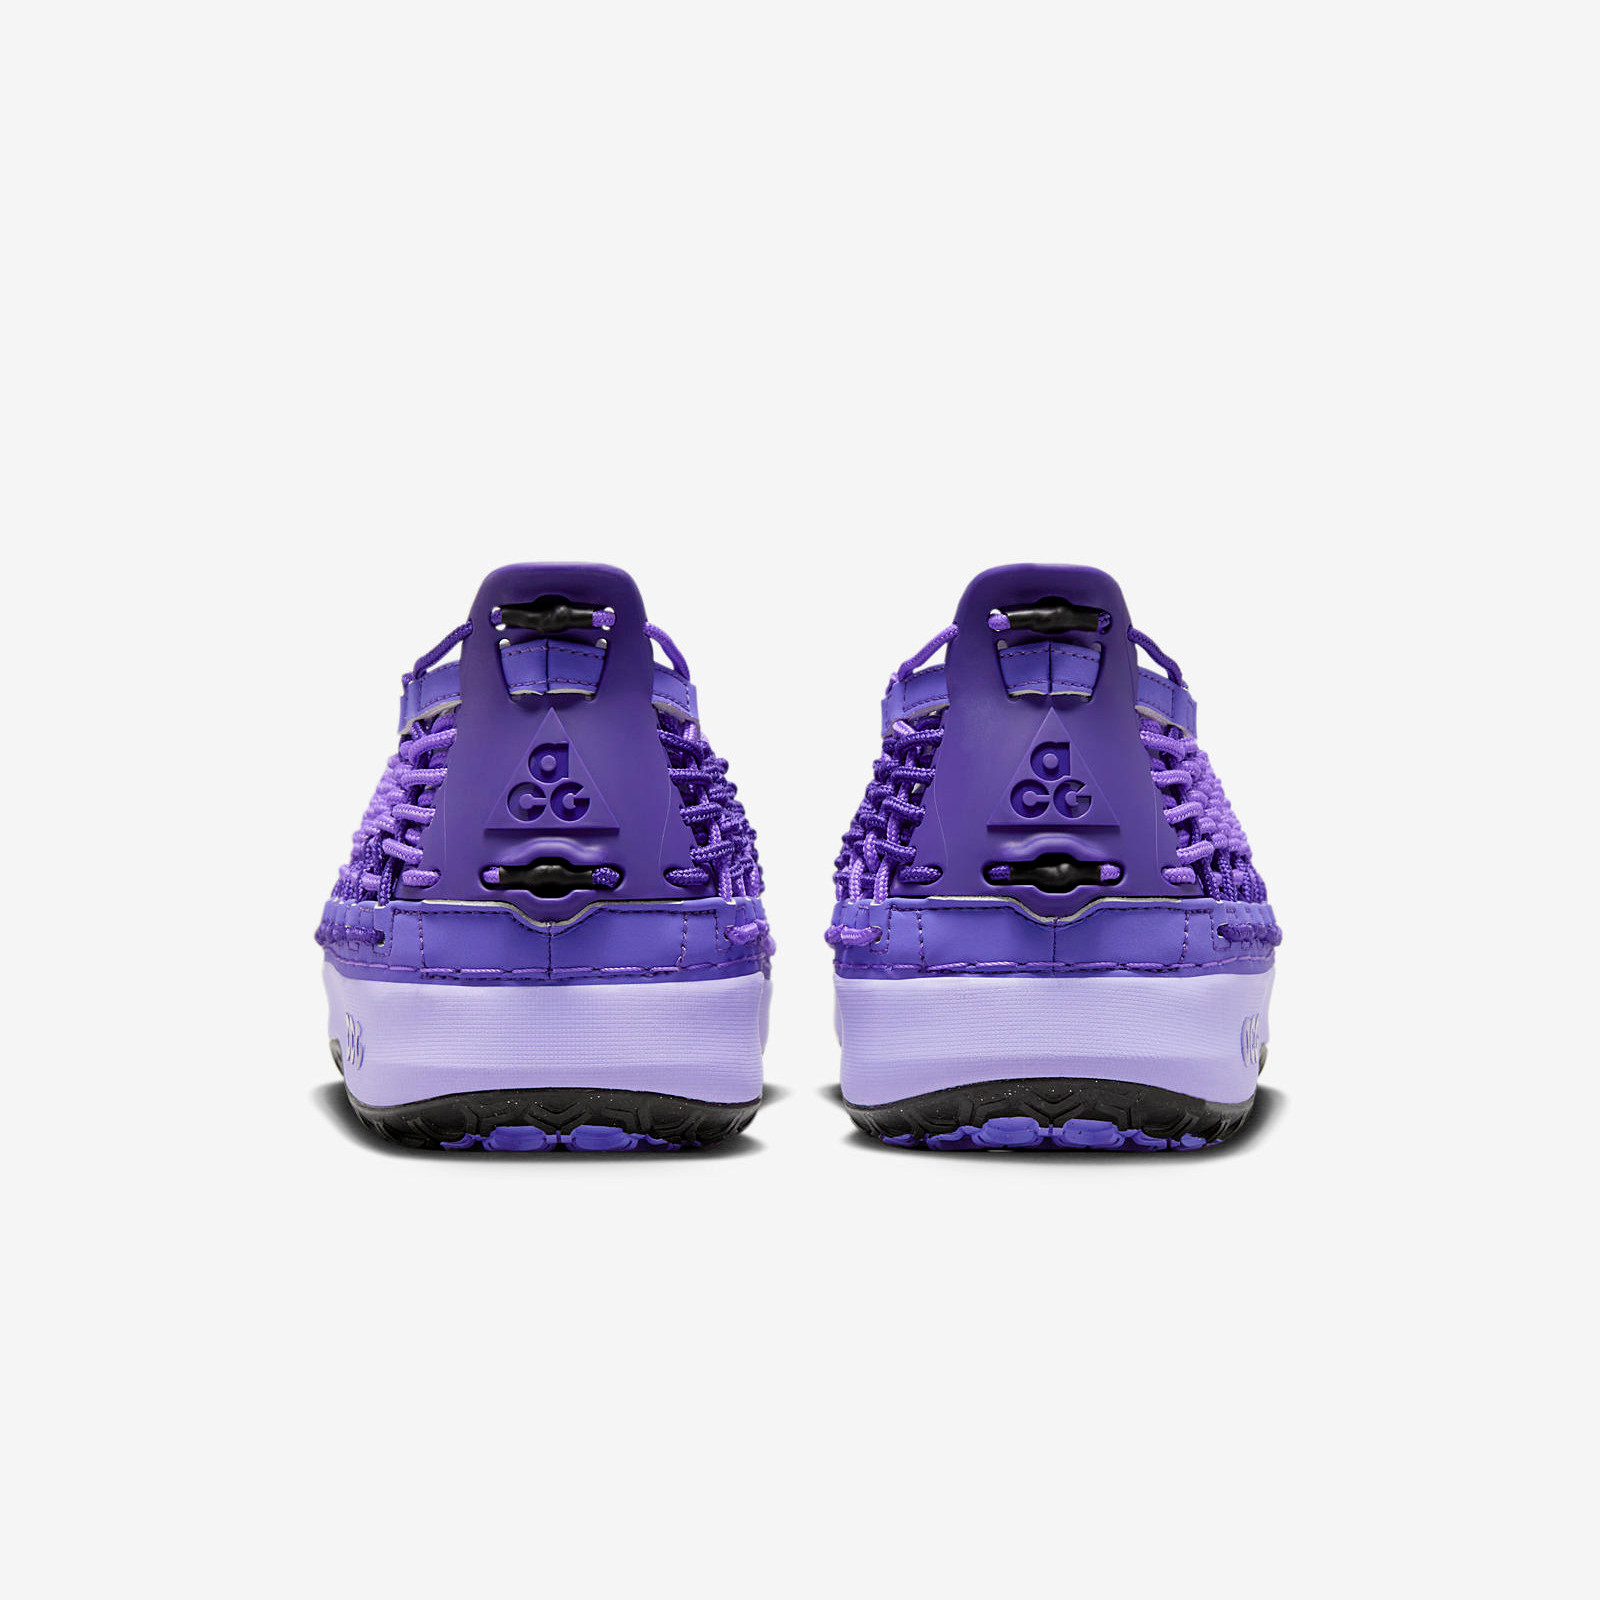 Nike ACG Watercat+
« Court Purple »